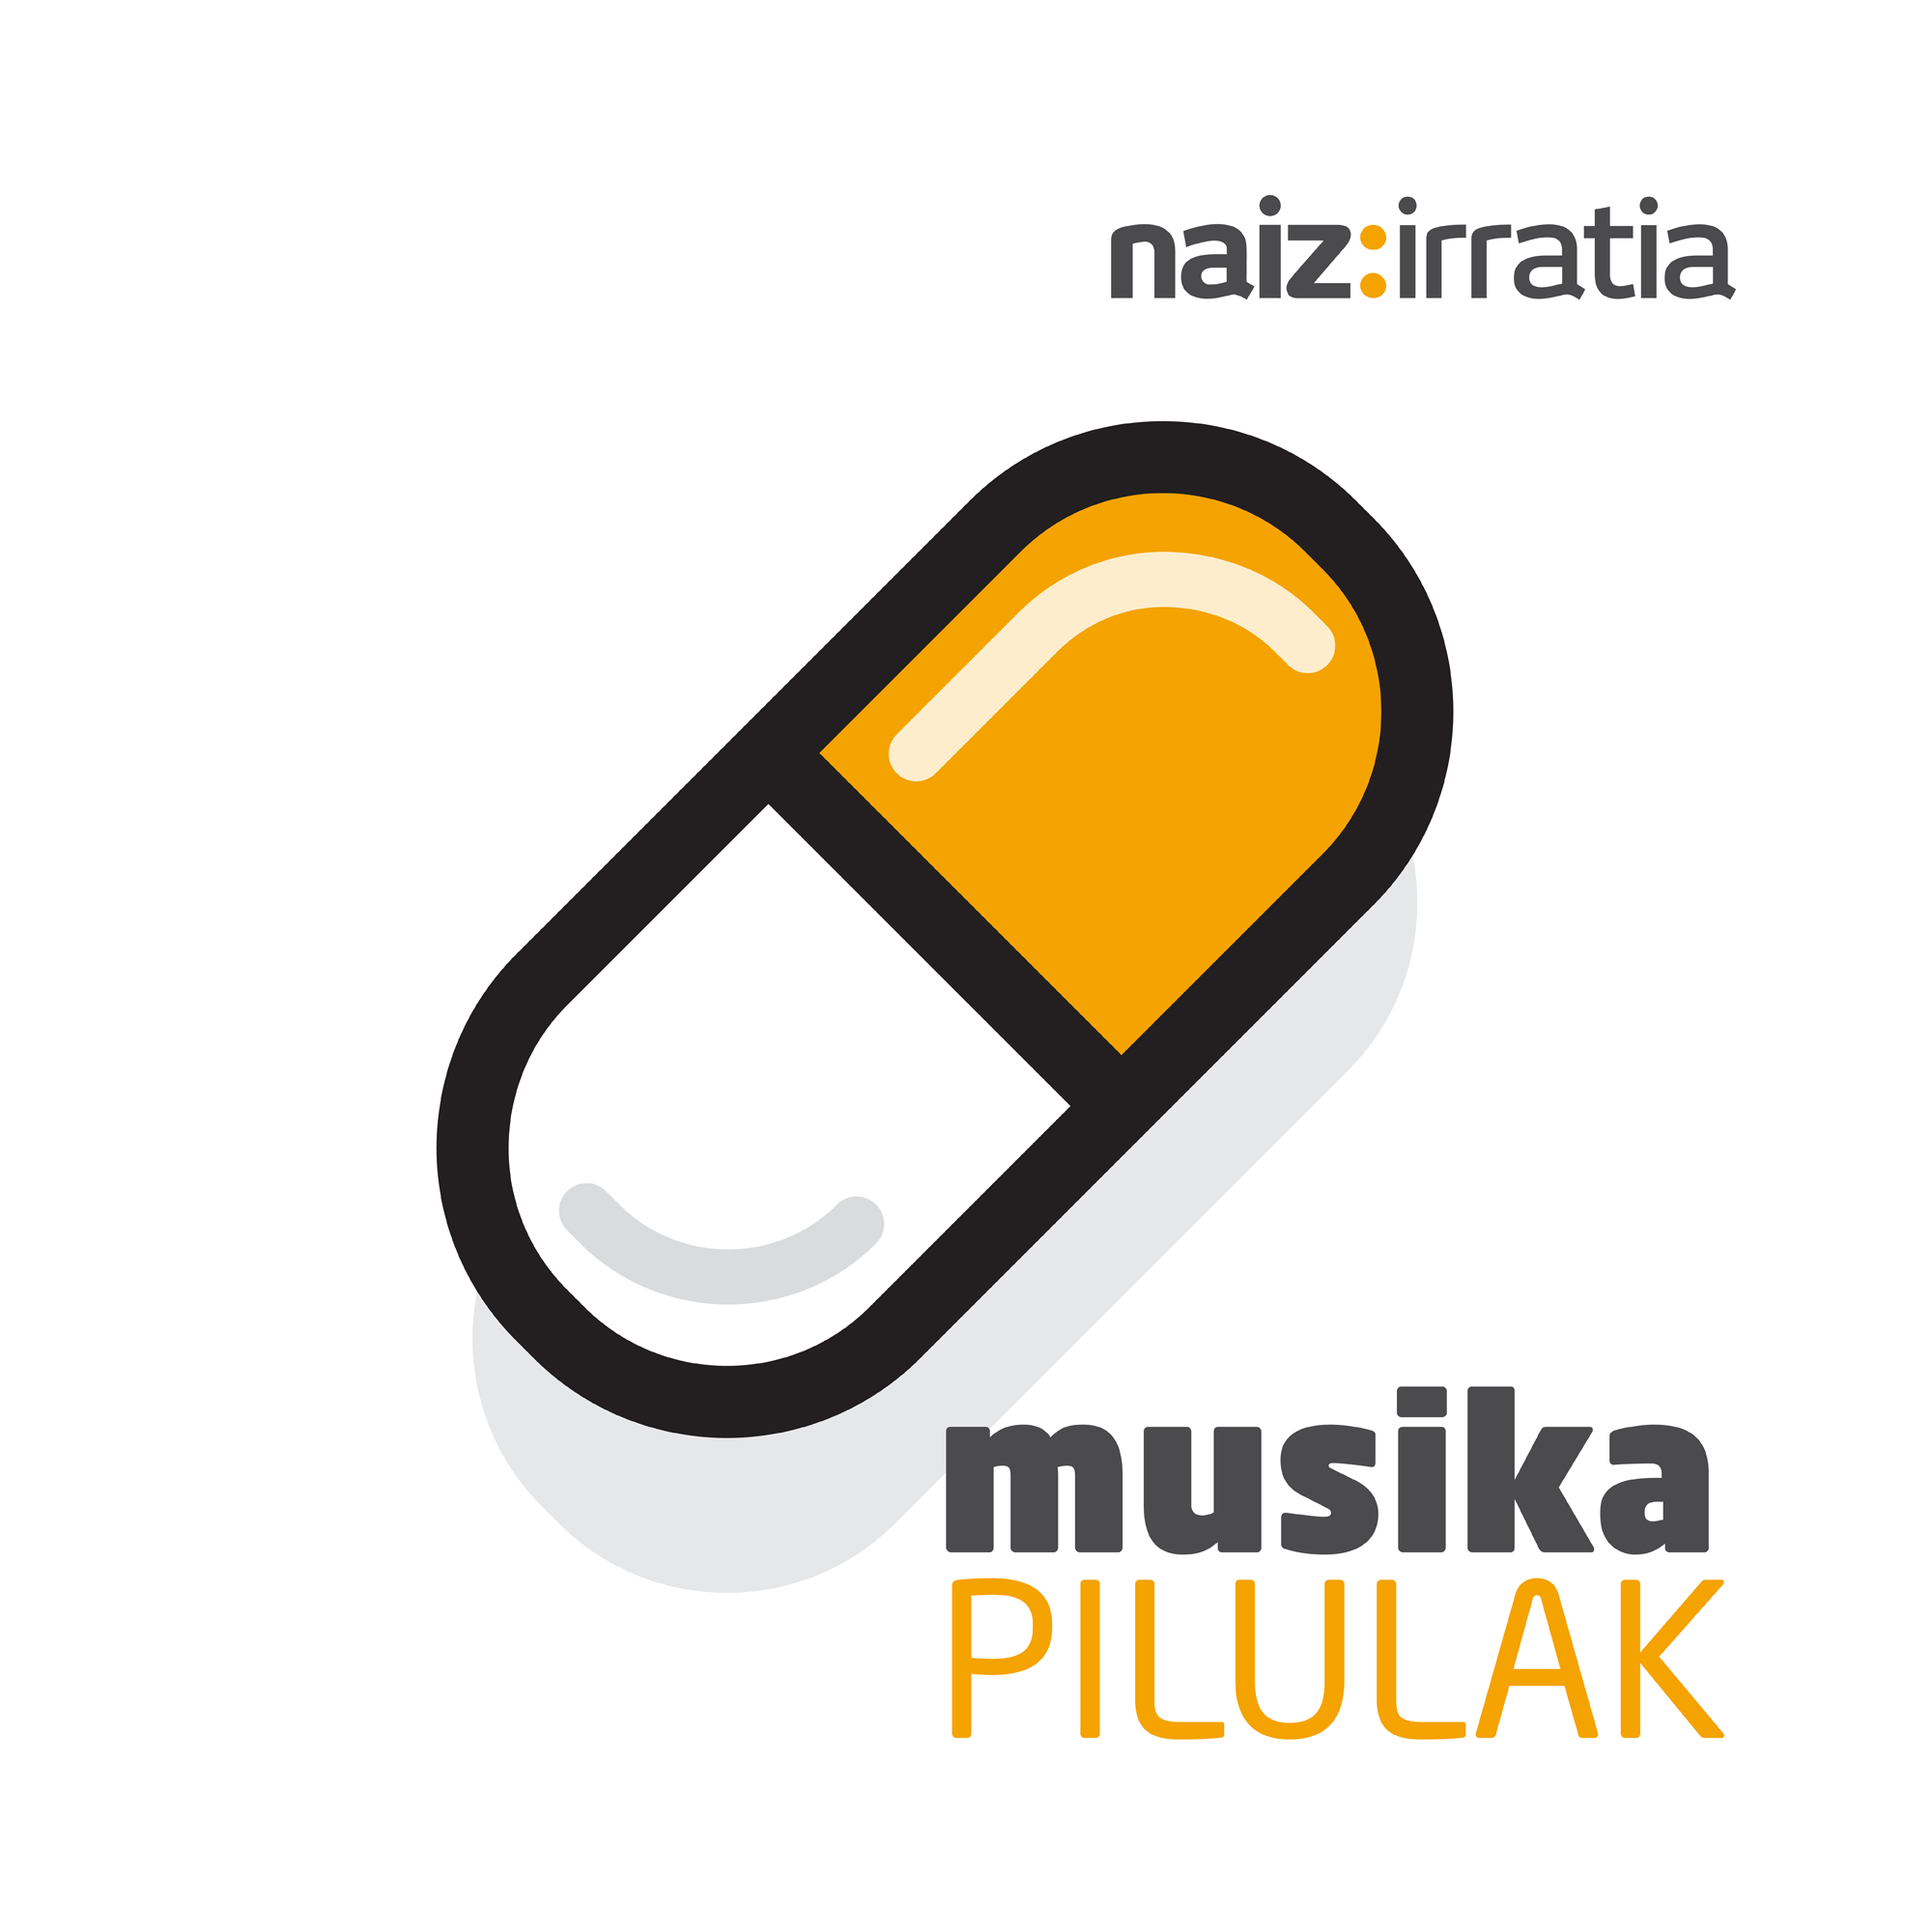 https://irratia.naiz.eus/media/asset_publics/resources/000/671/268/original/musika_pilulak-01.png